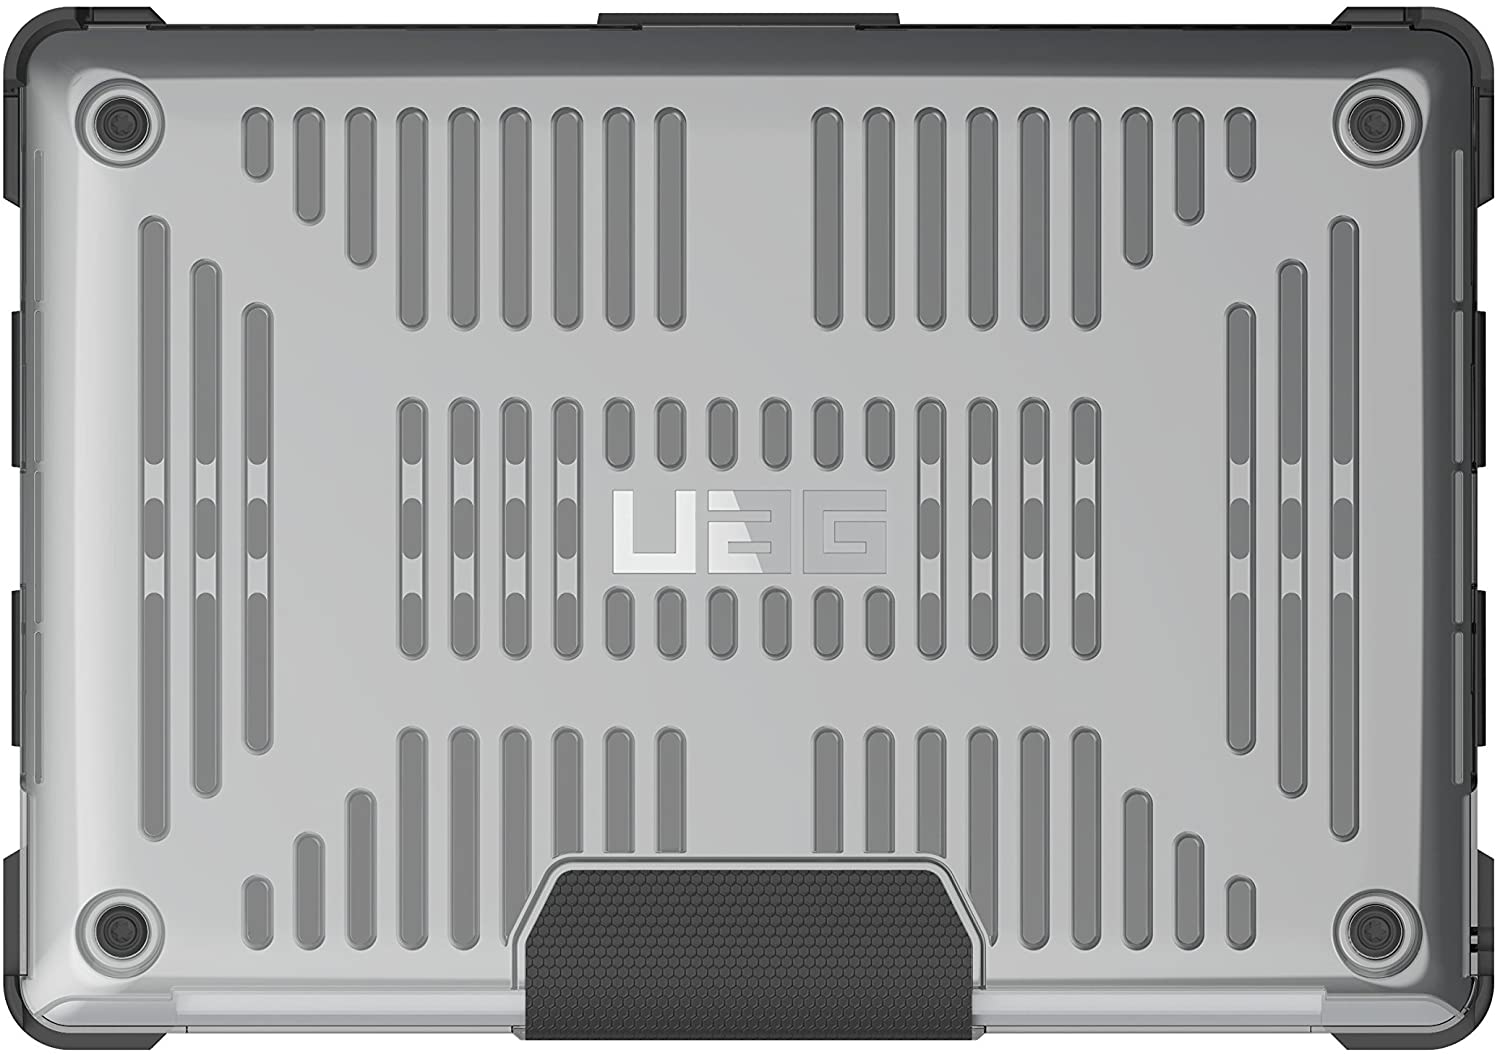 UAG Macbook Pro 15 inch with Touchbar-Ice/Black